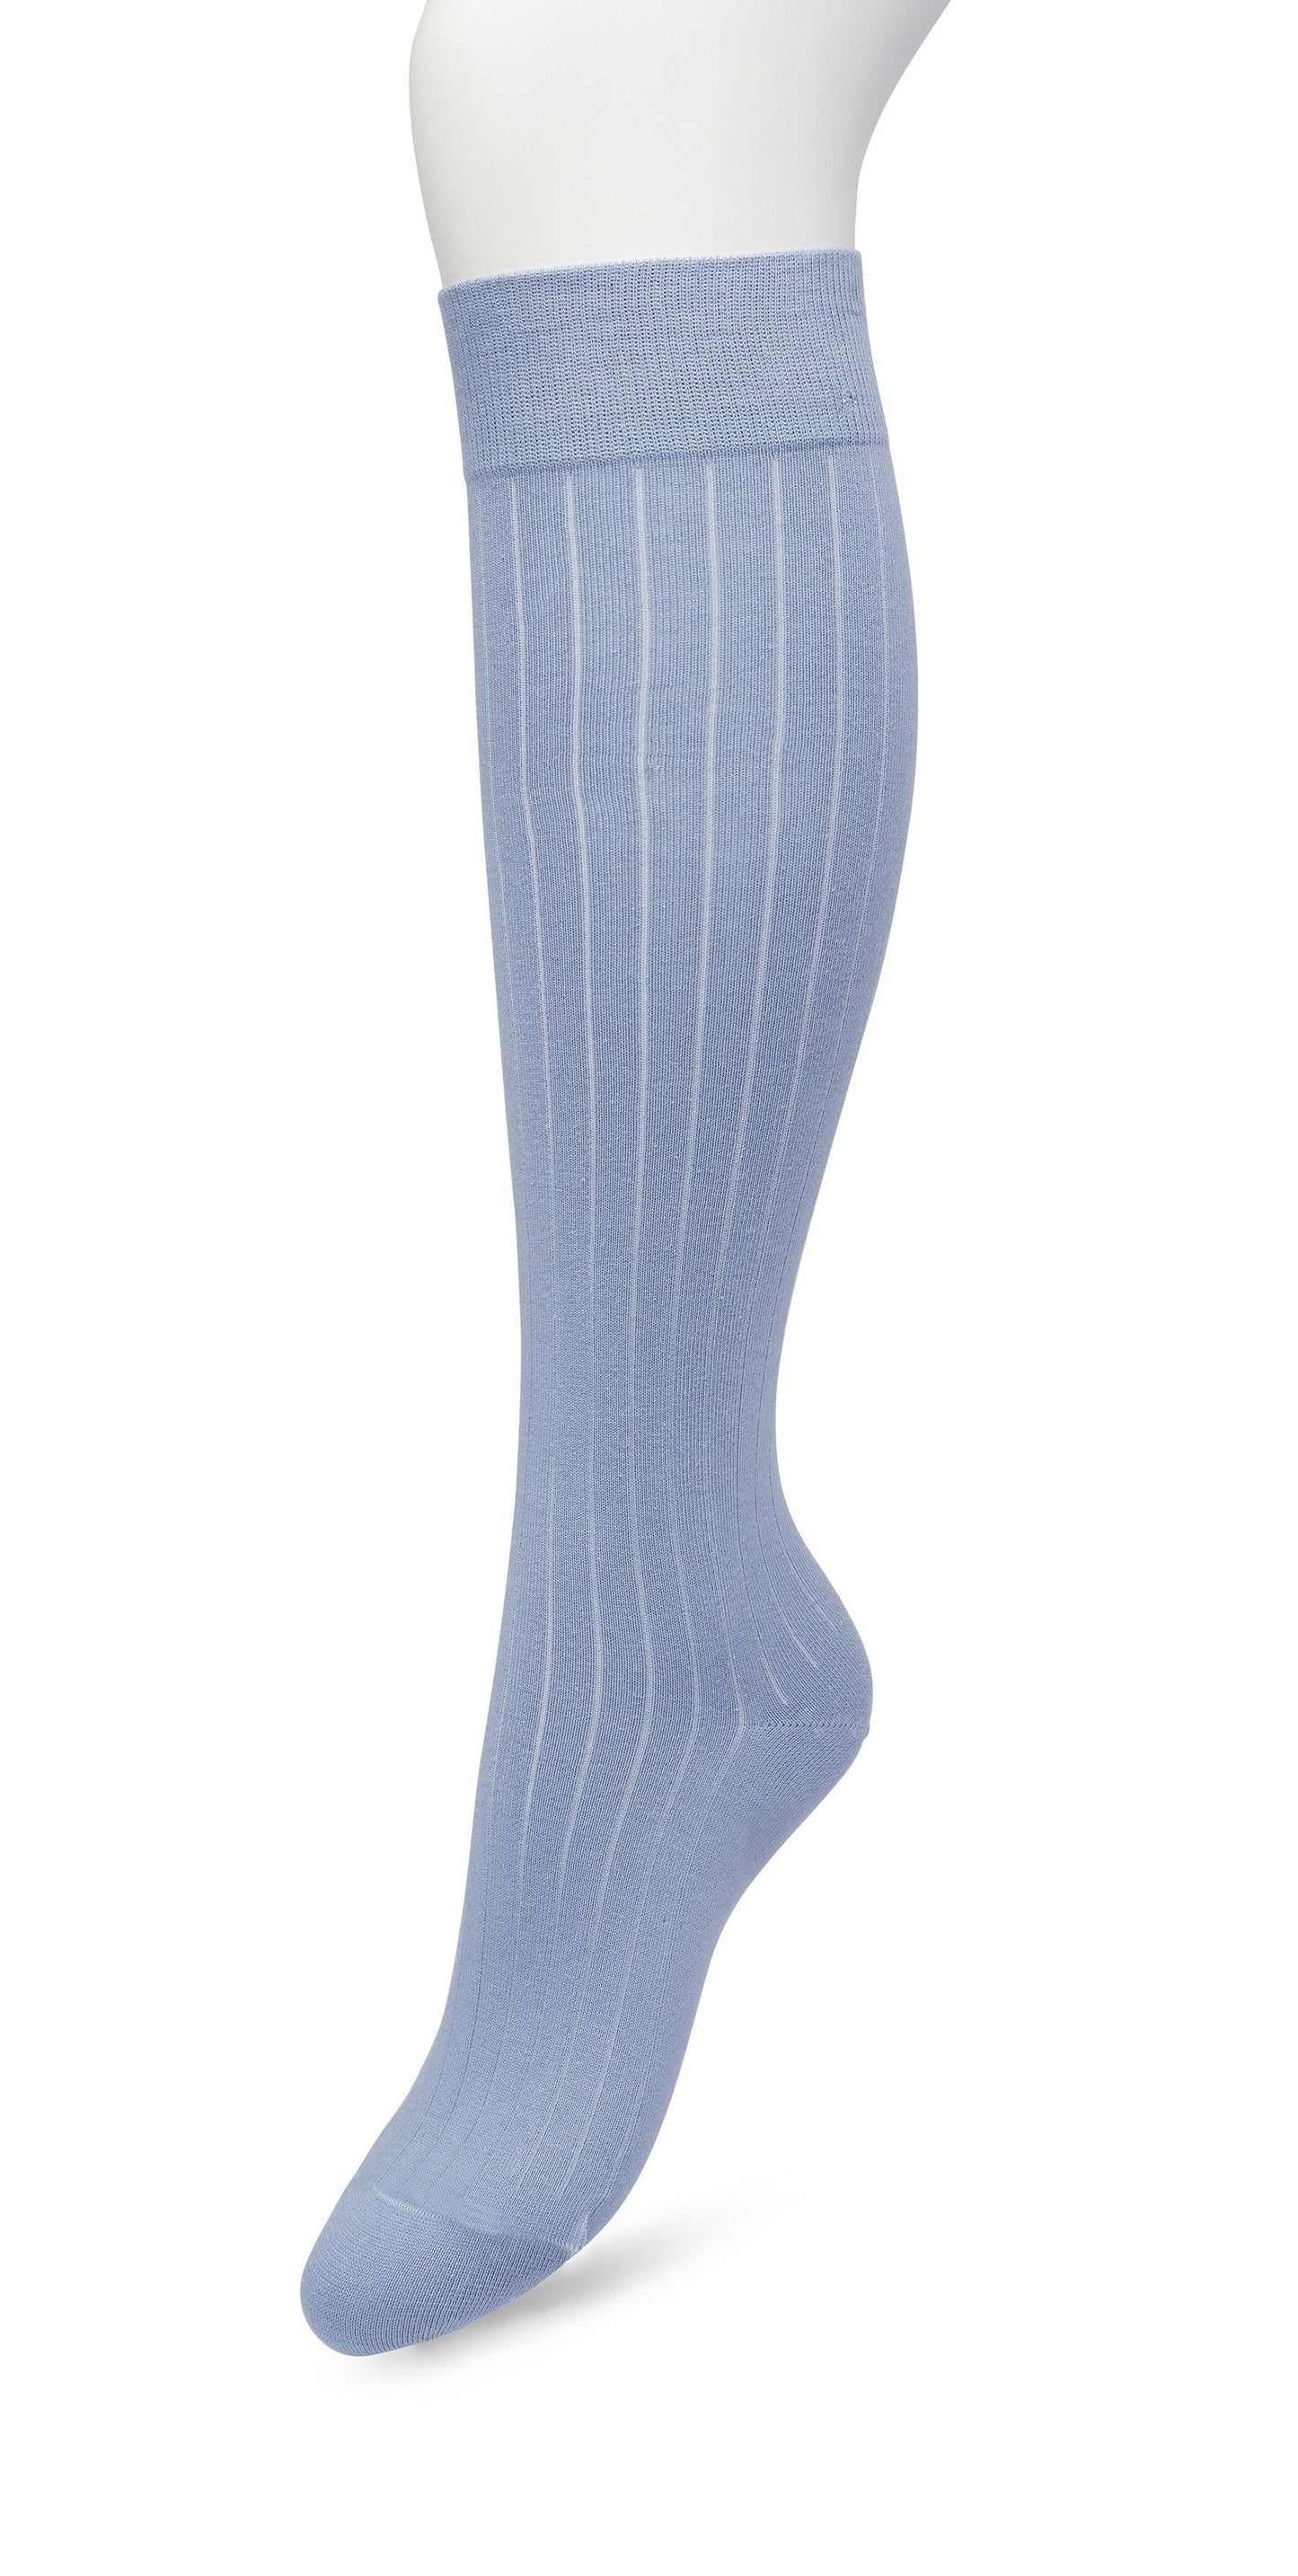 Bonnie Doon Rib Knee High Sock - Pale blue (Citadel) knitted rib knee-high sock with shaped heel, flat toe seam and deep elasticated cuff.